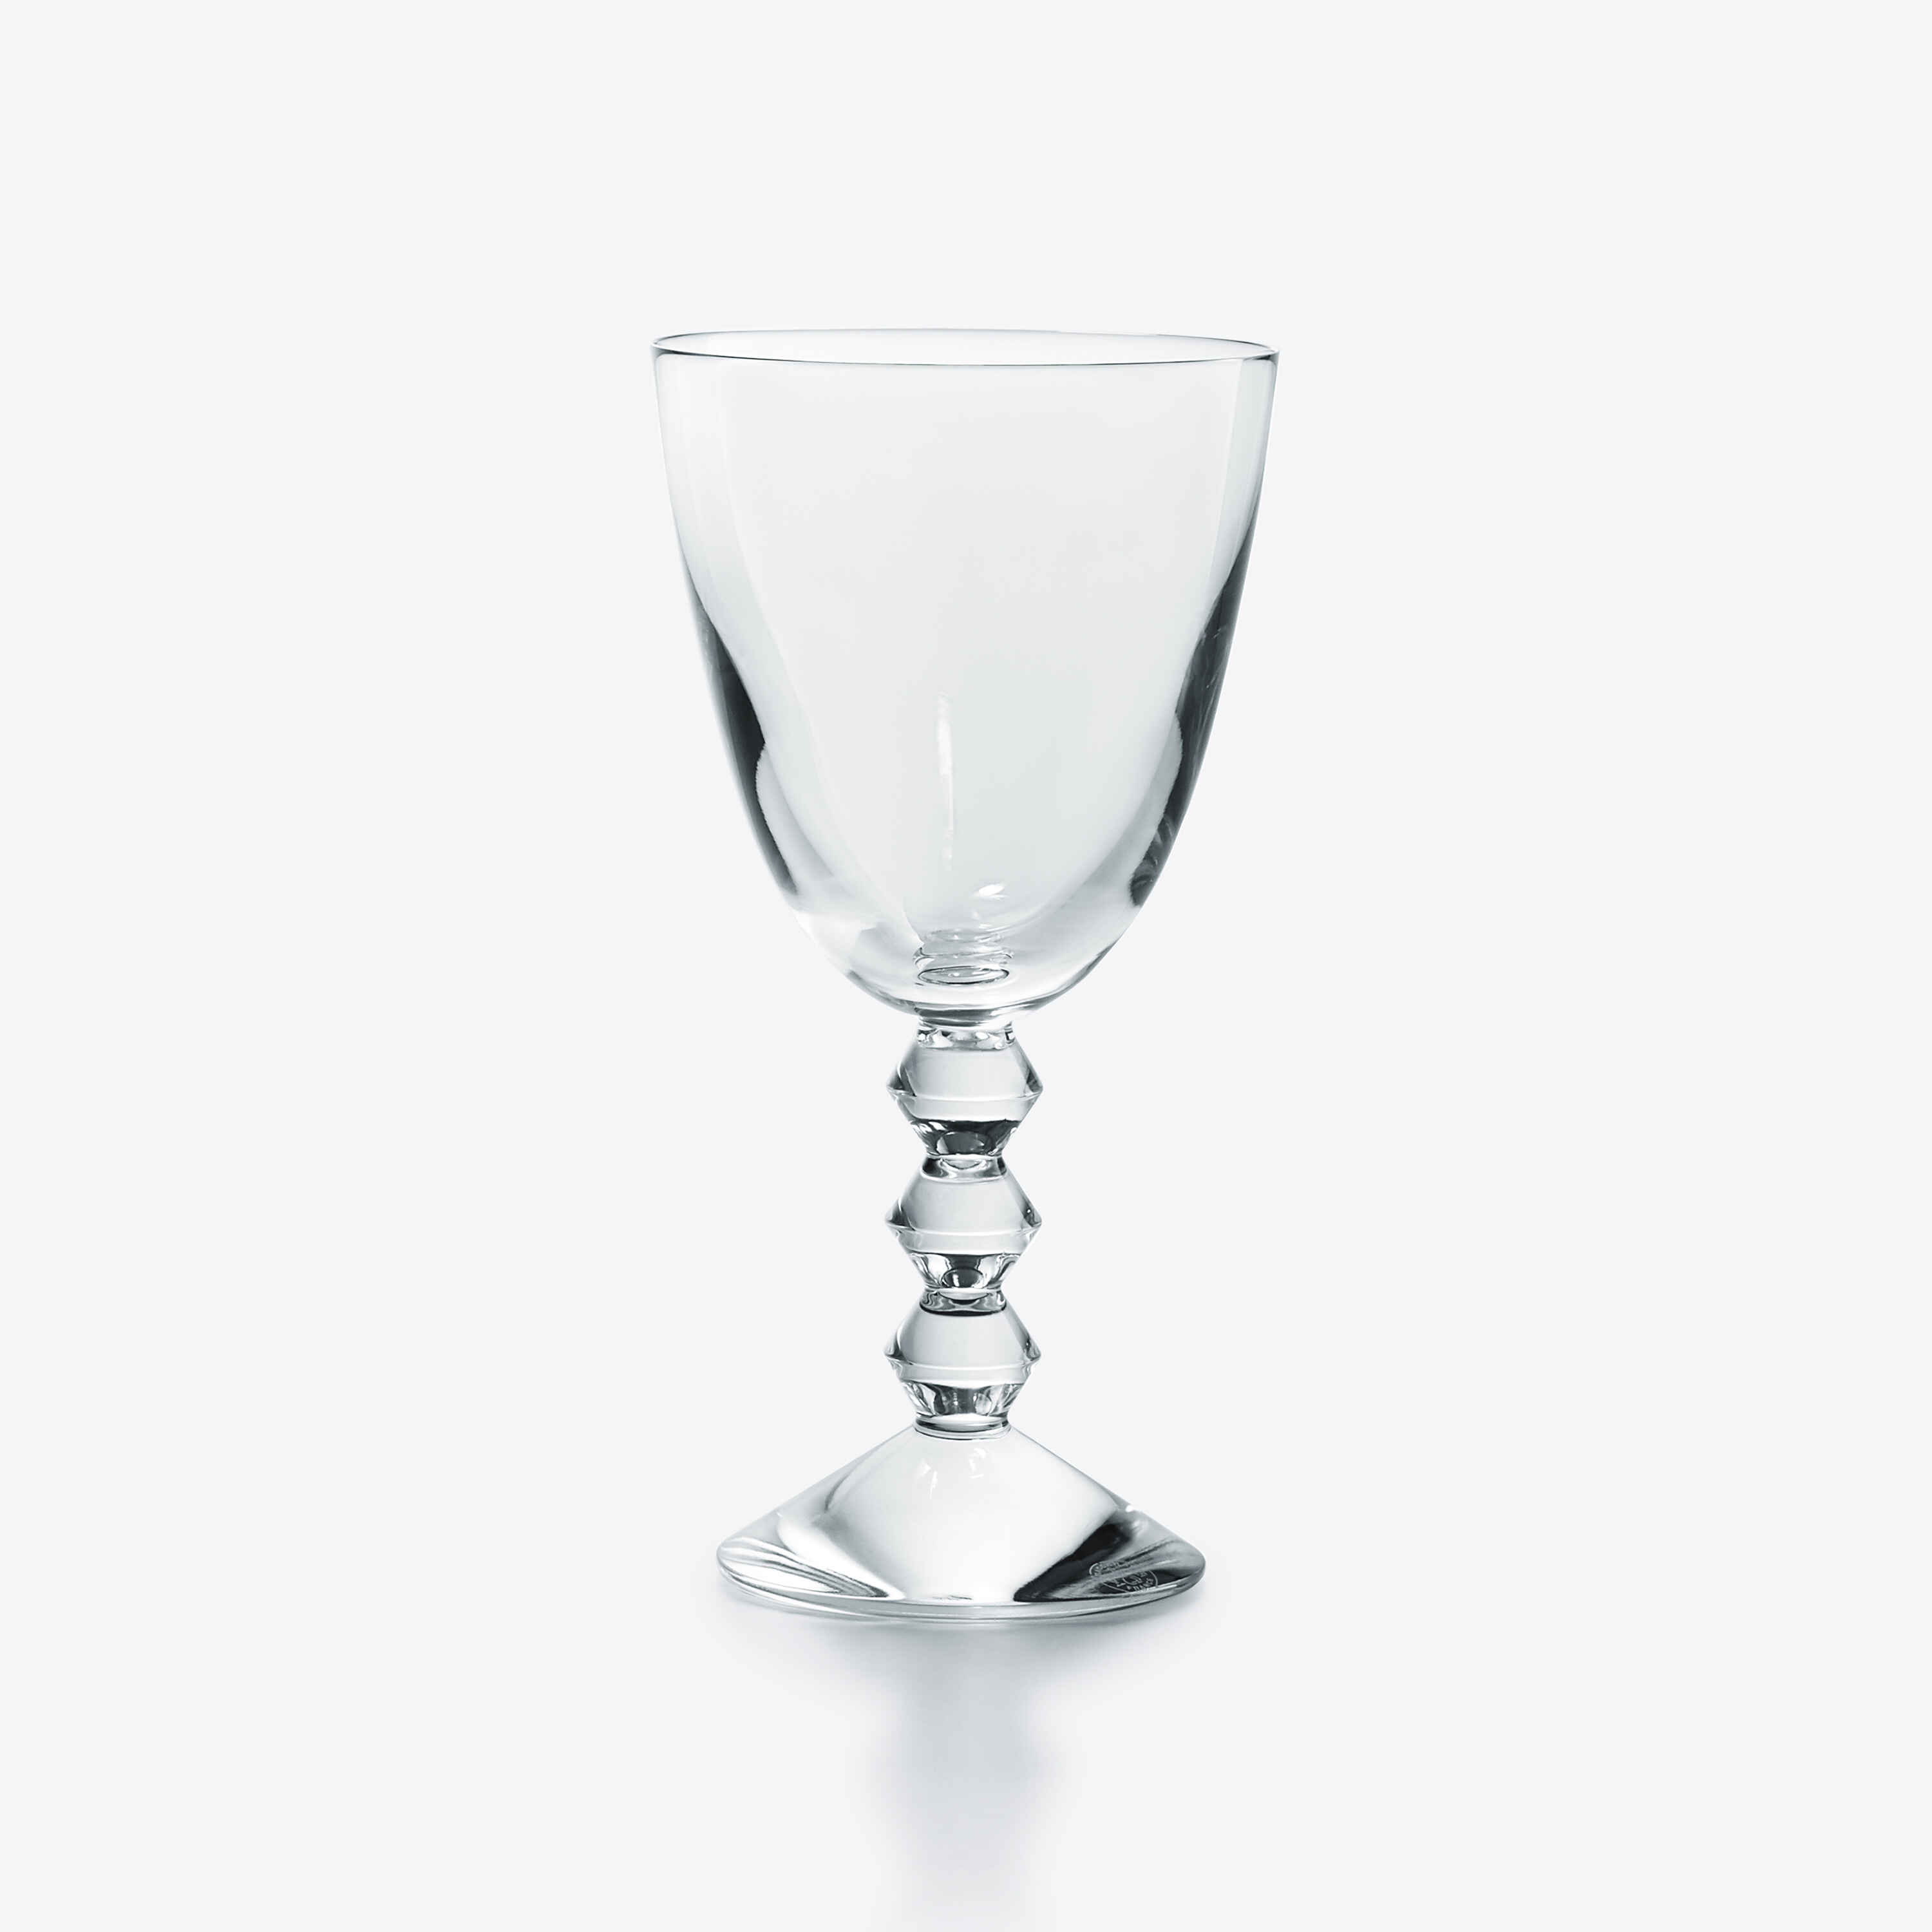 Top 5 Luxury Wine Glasses to Buy Online - Accent Mirror